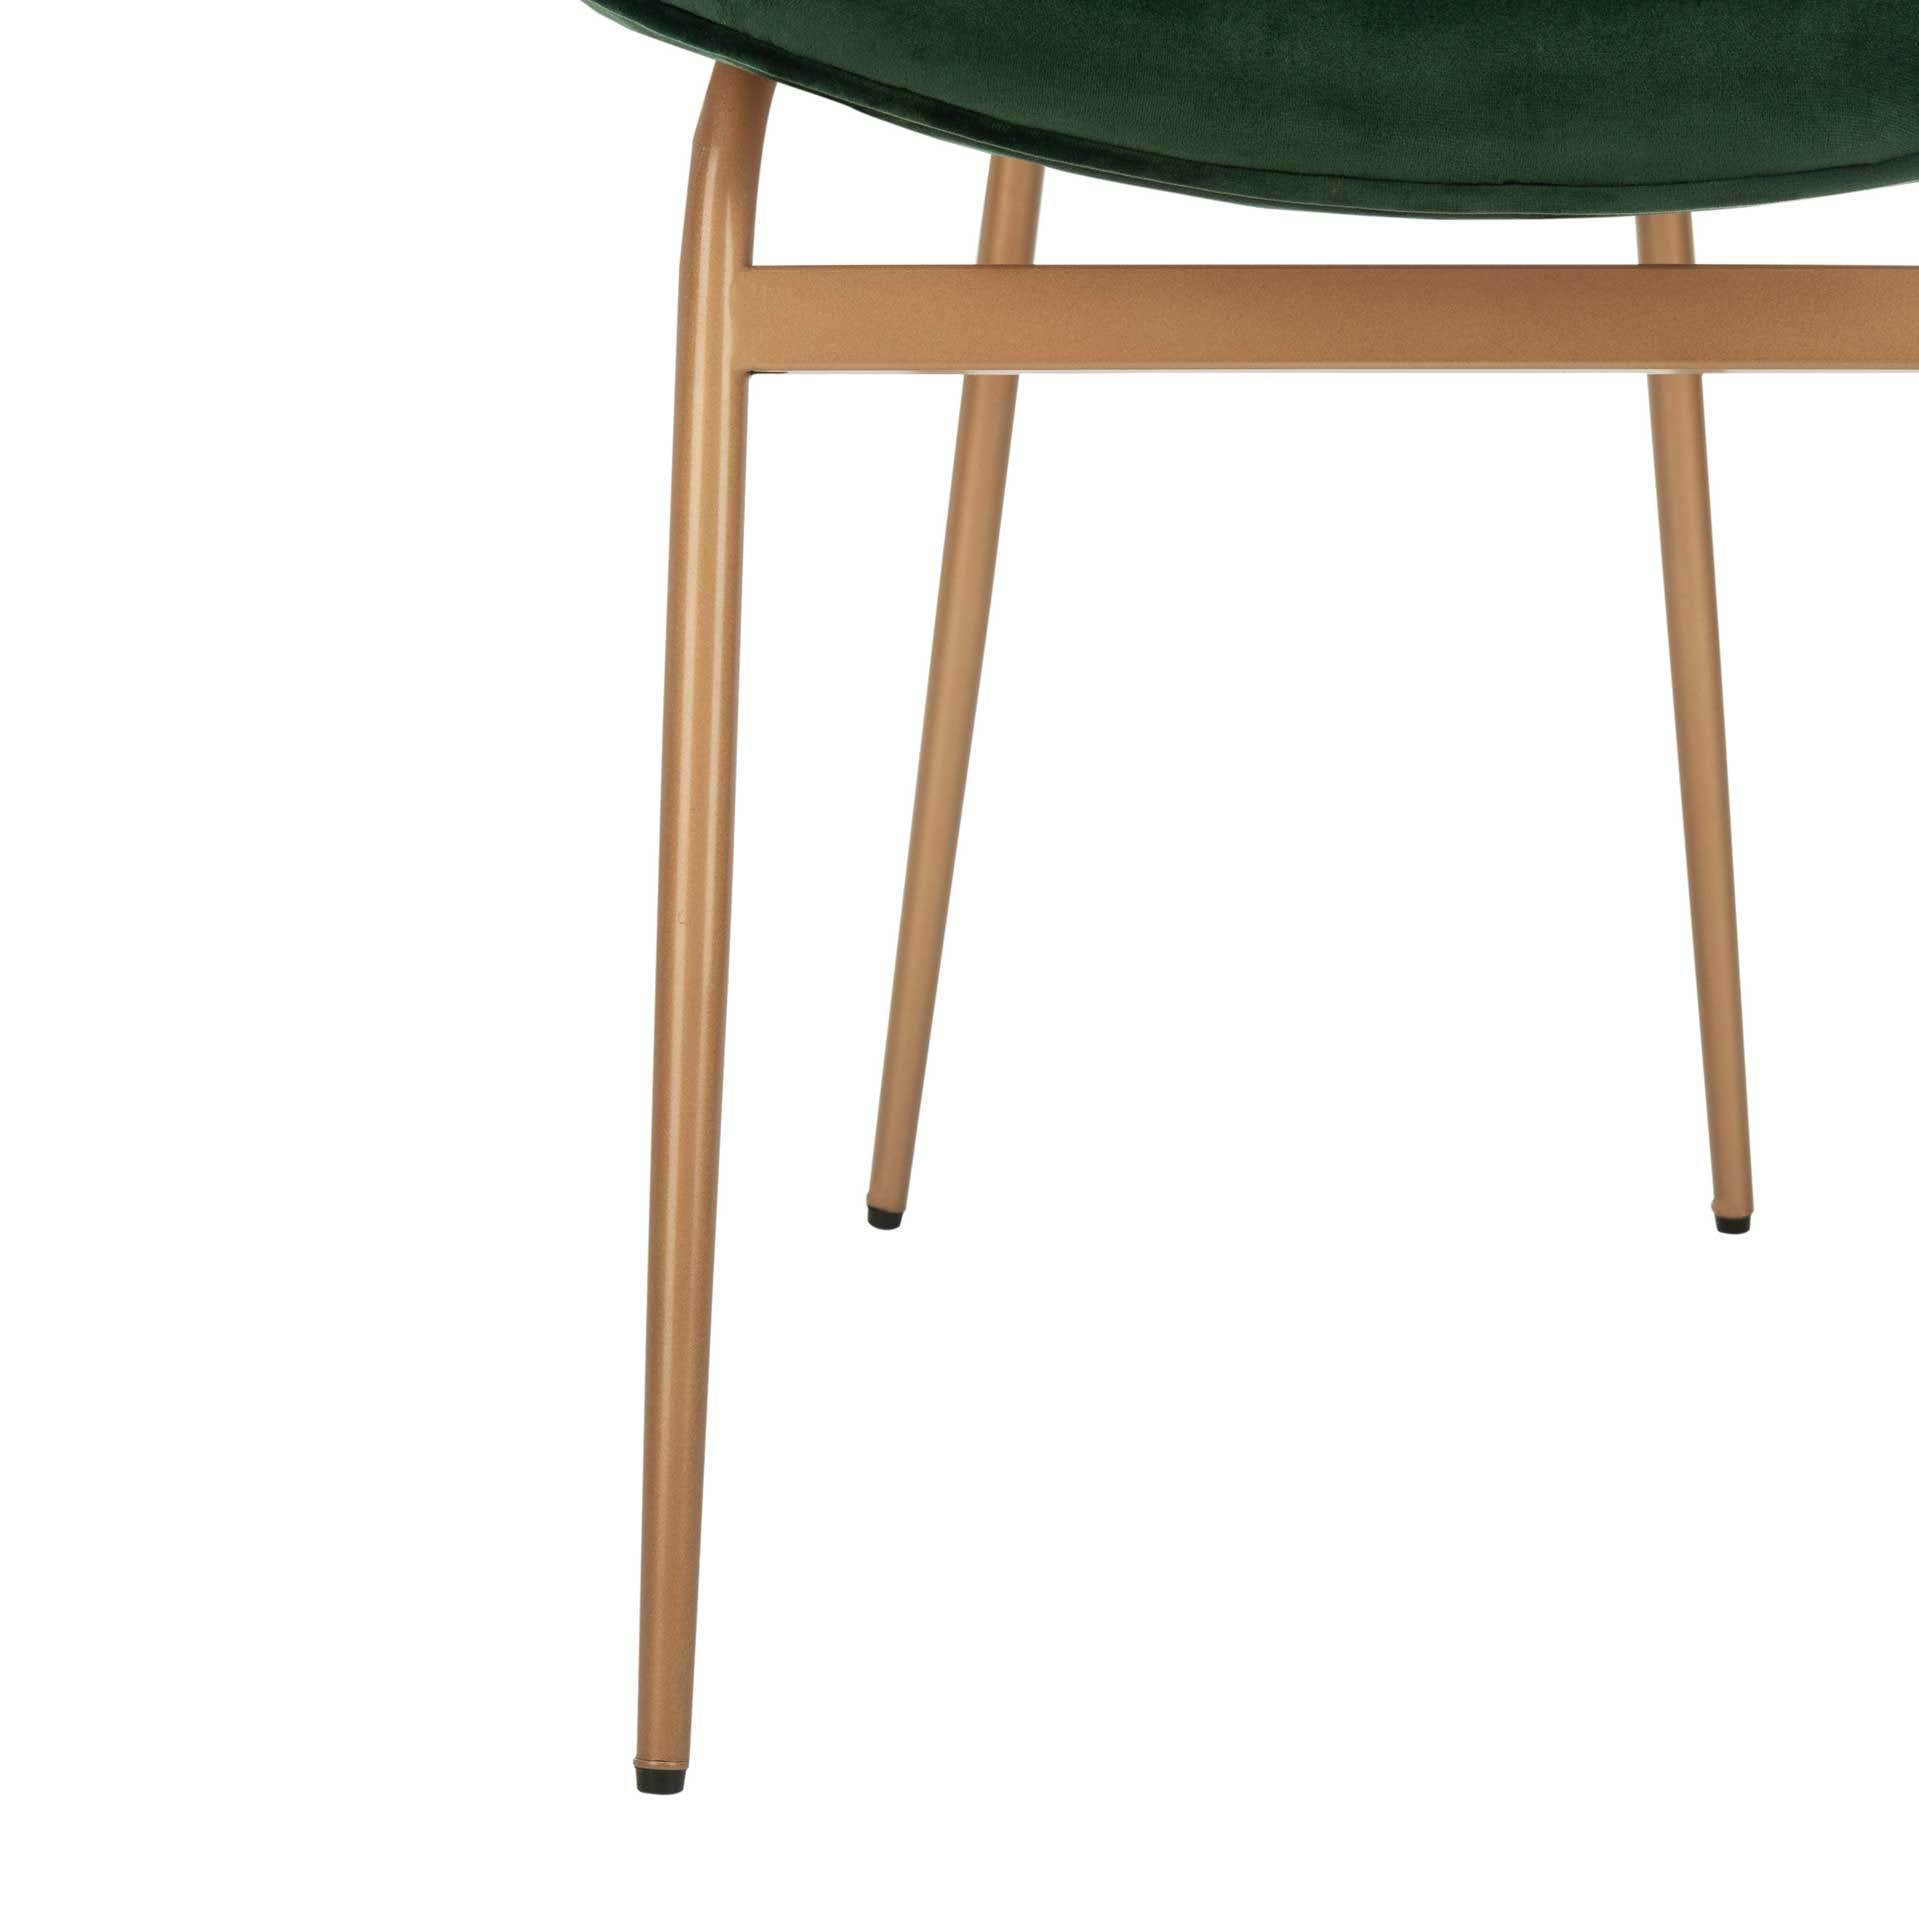 Jorden Round Side Chair Malachite Green/Gold (Set of 2)